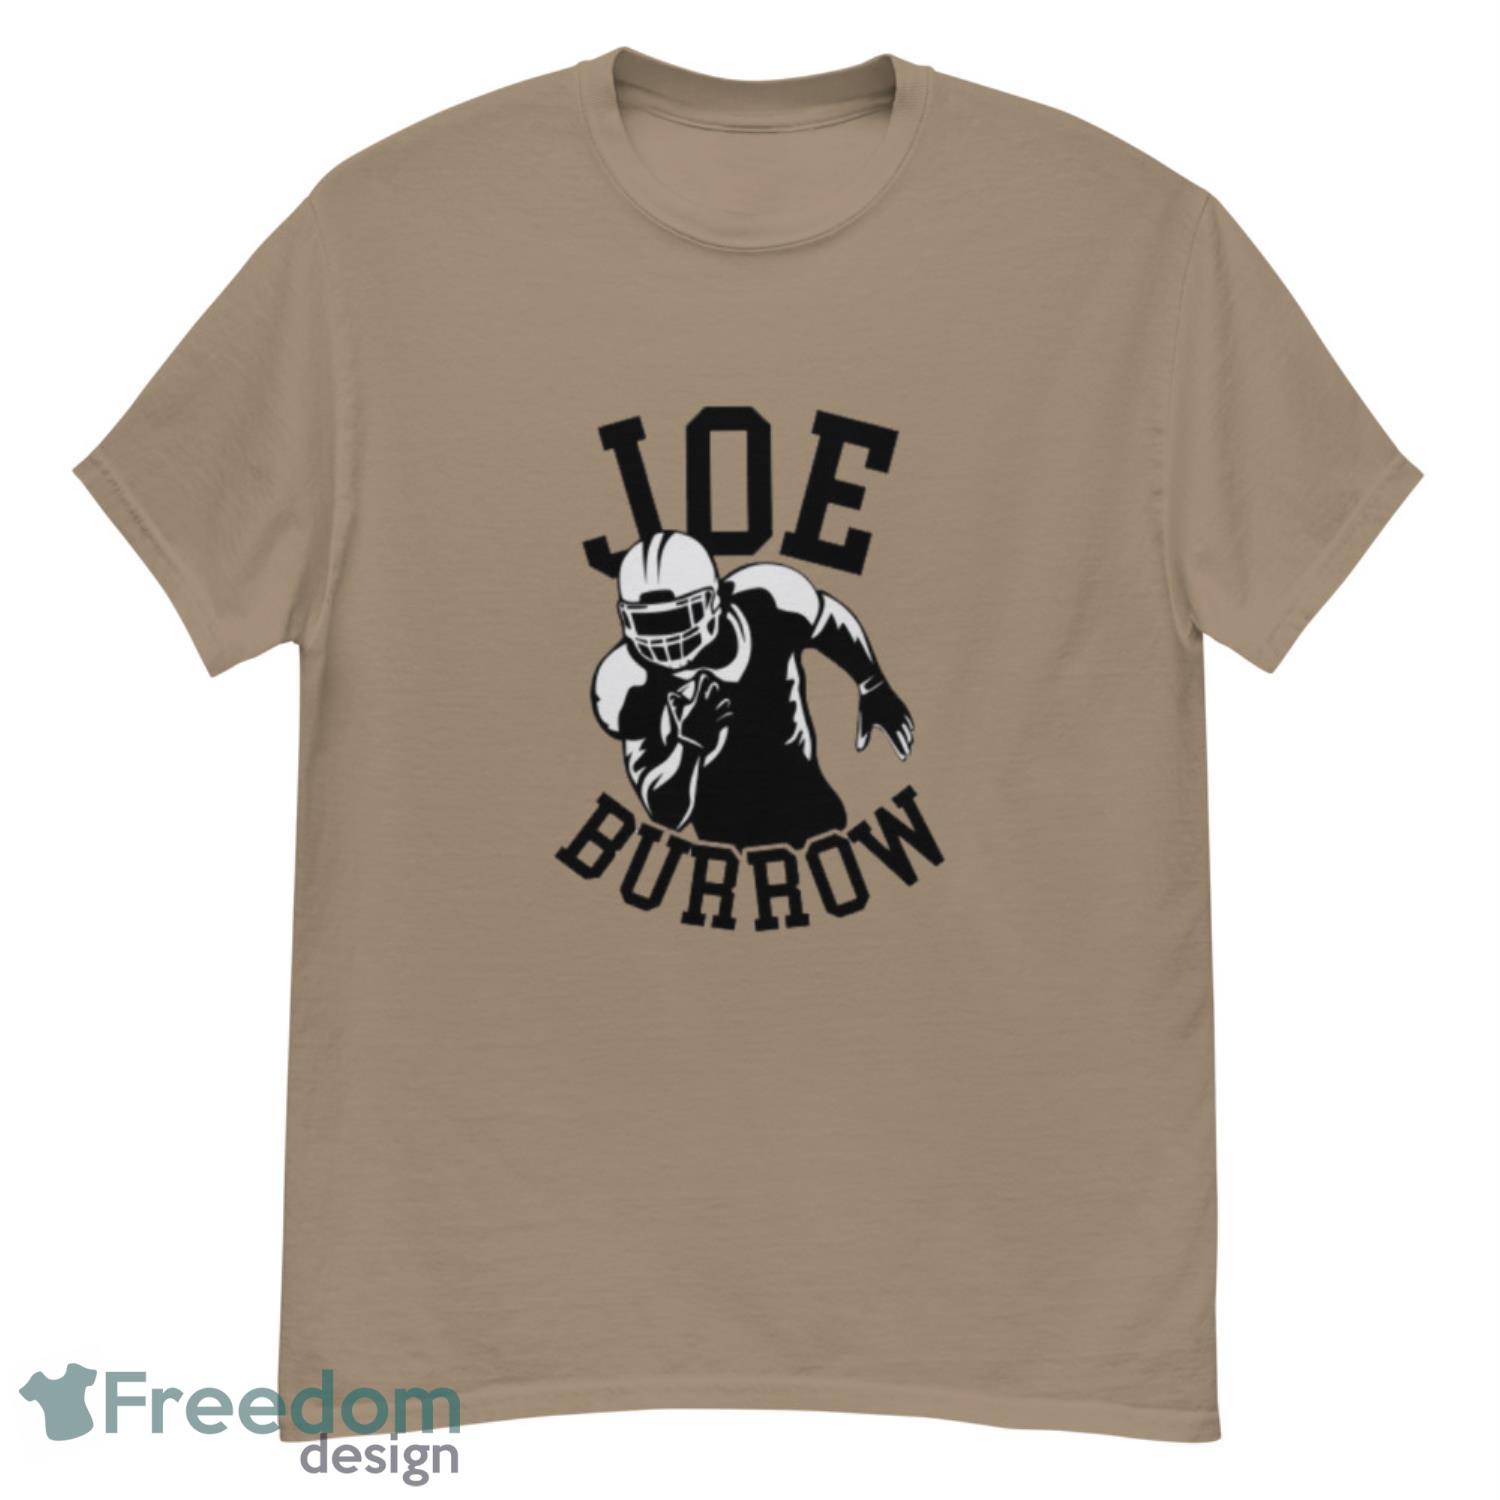 Joe Burrow Cincinnati Bengals NFL shirt - Trend T Shirt Store Online